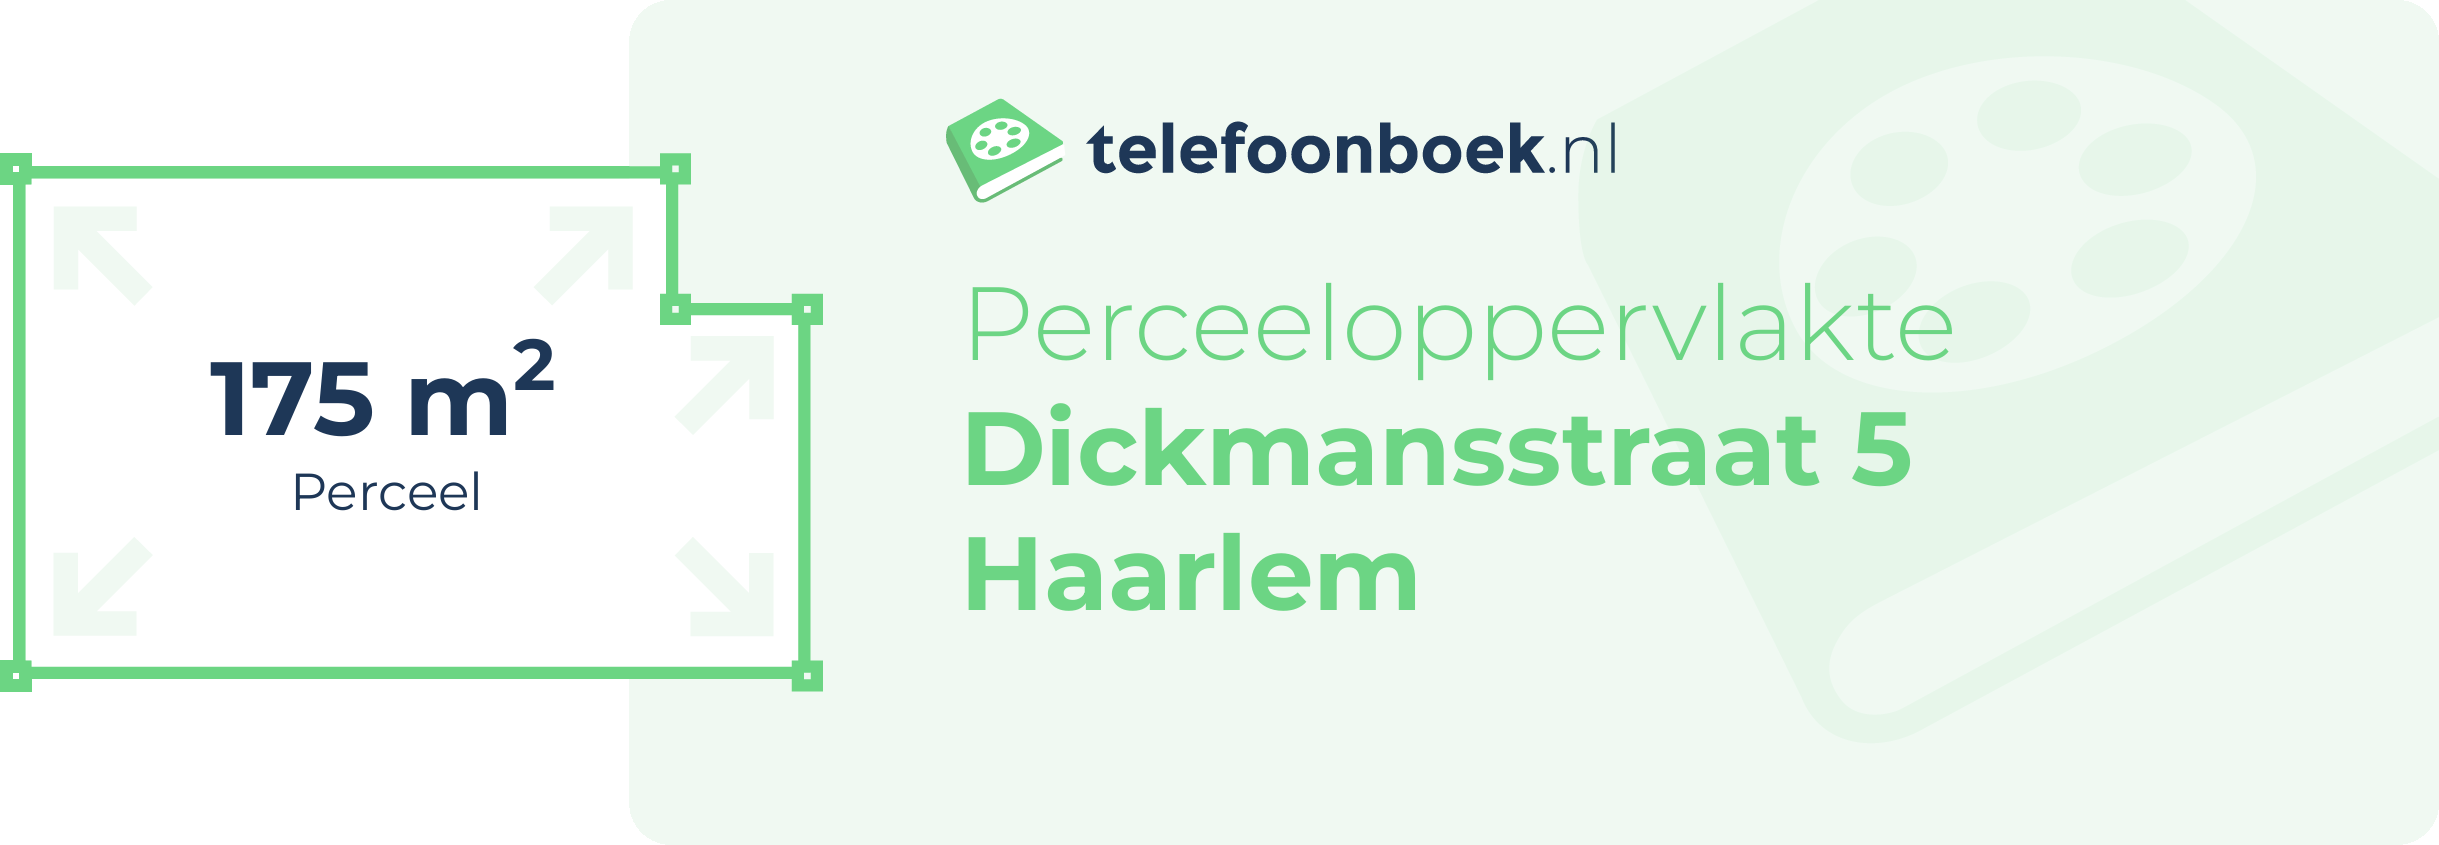 Perceeloppervlakte Dickmansstraat 5 Haarlem